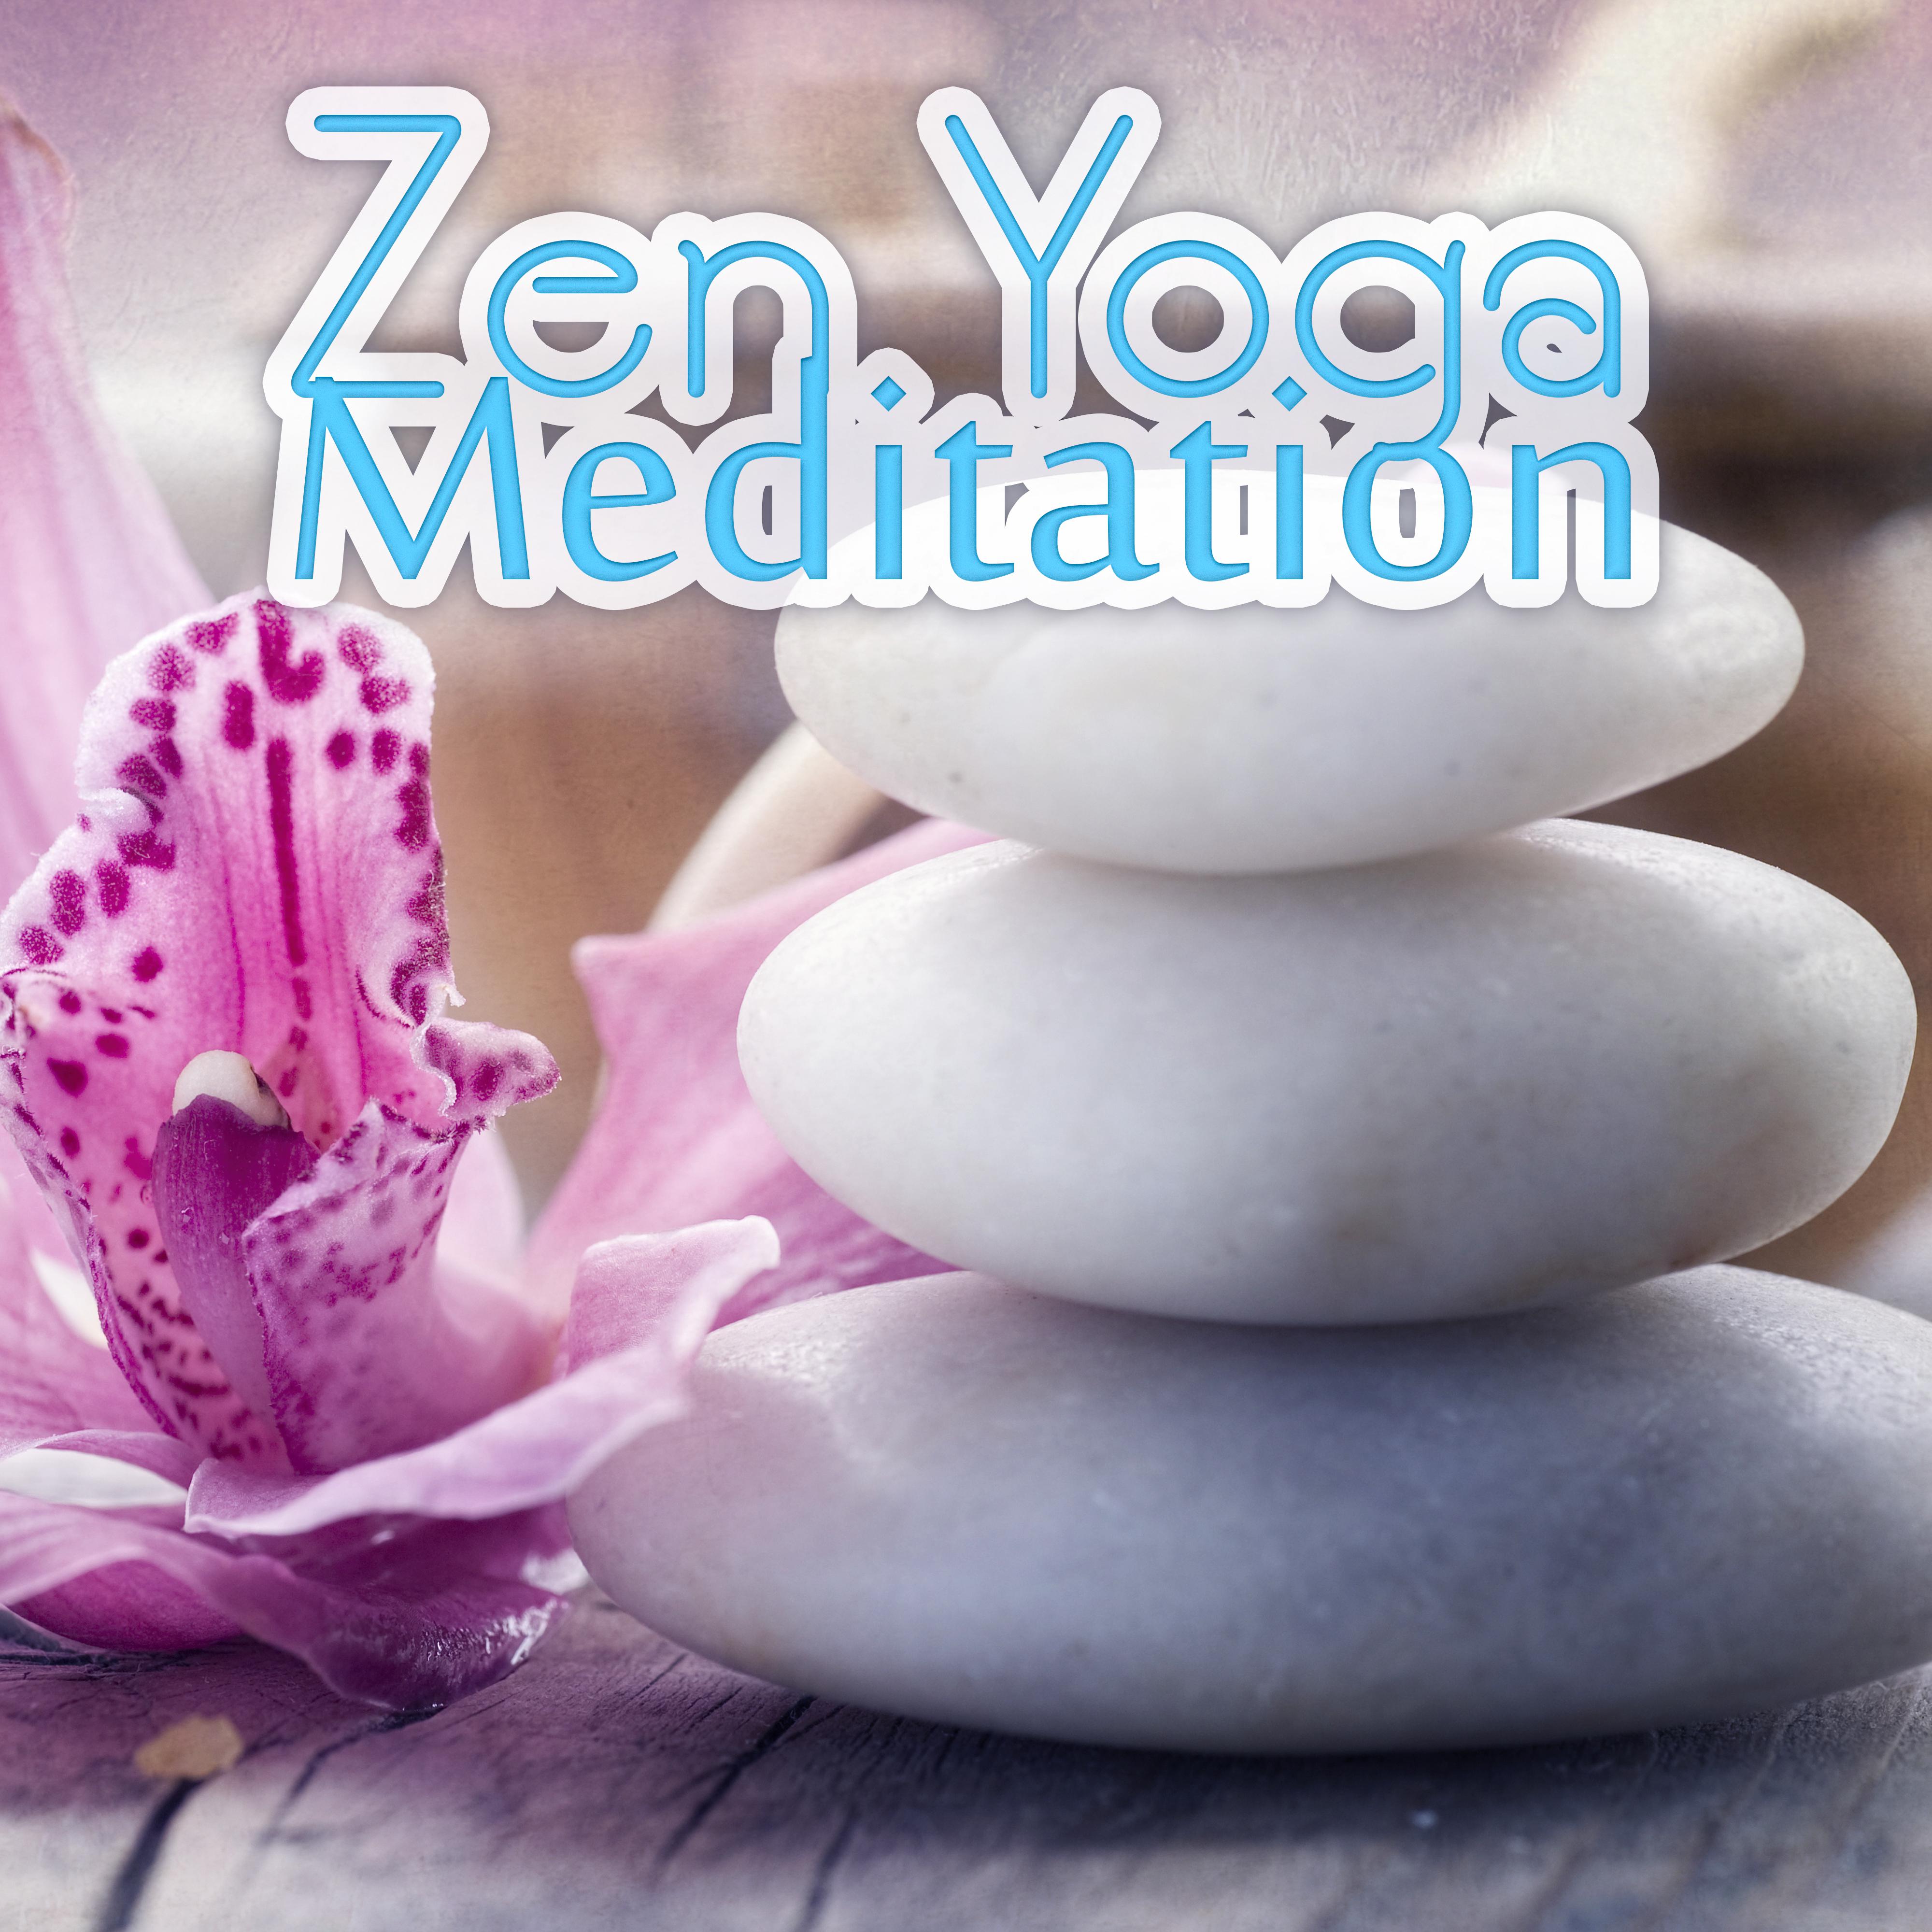 Zen Yoga Meditation – Calming Music, Yoga, Contemplation, Sun Salutation, Relaxing Music, Easy Listening, Blissful, Mindful Meditation